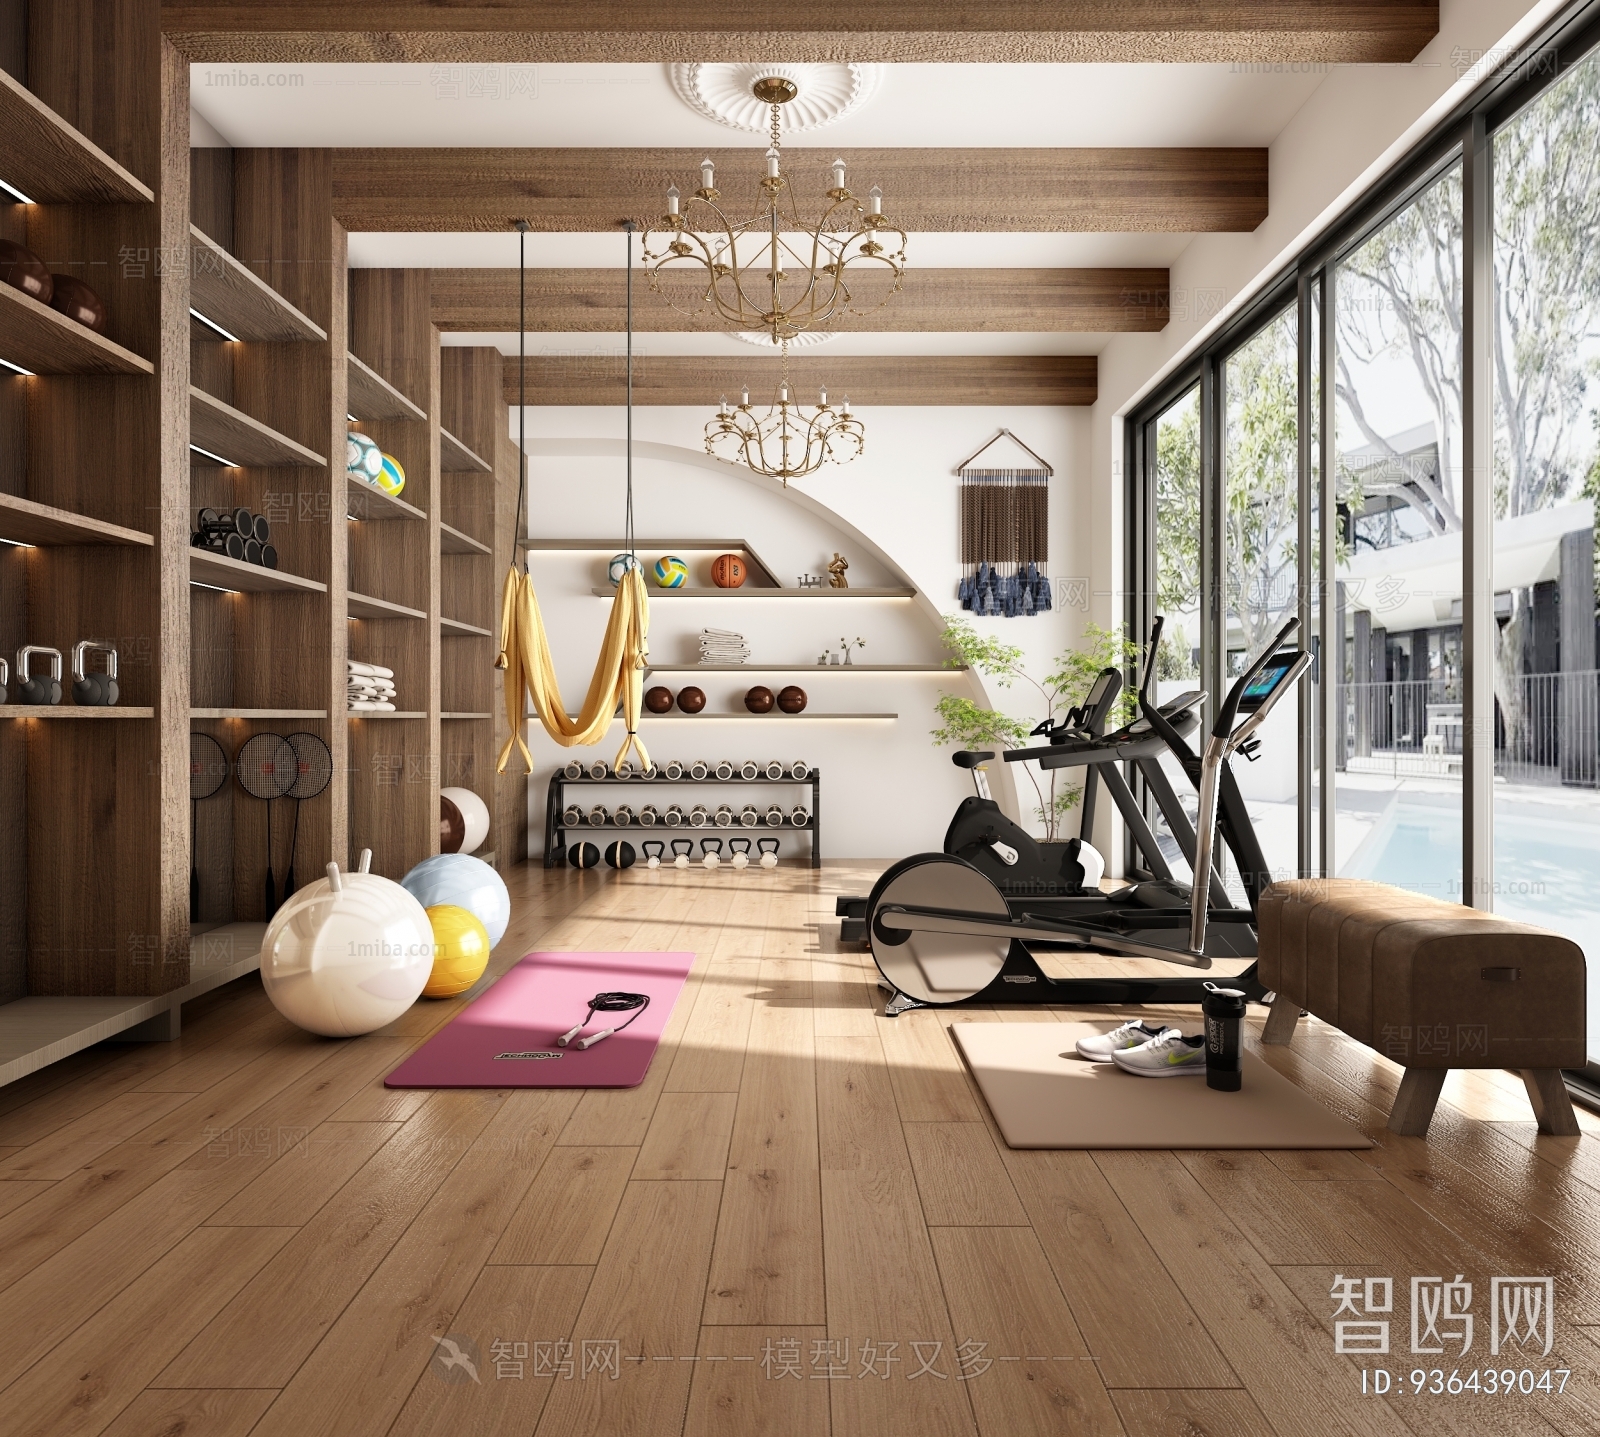 Modern Home Fitness Room